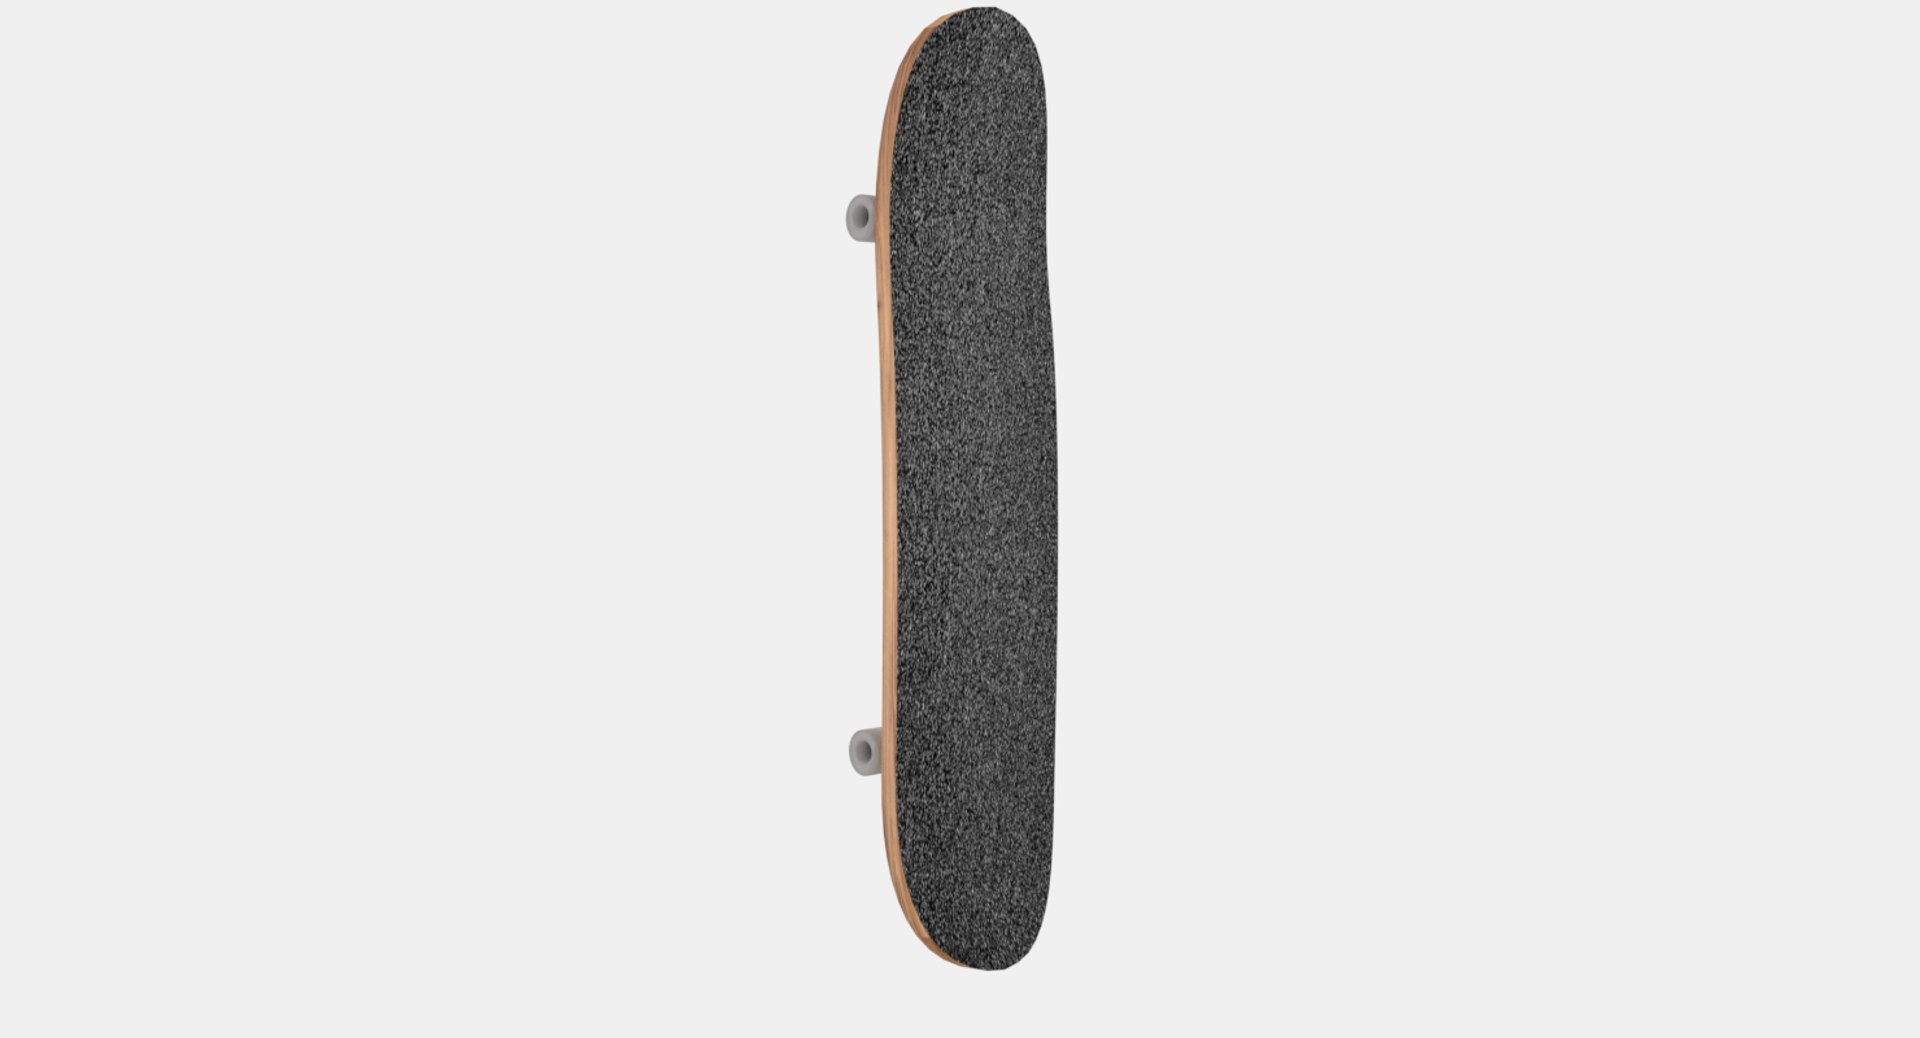 Simple skateboard 3D model - TurboSquid 1367325